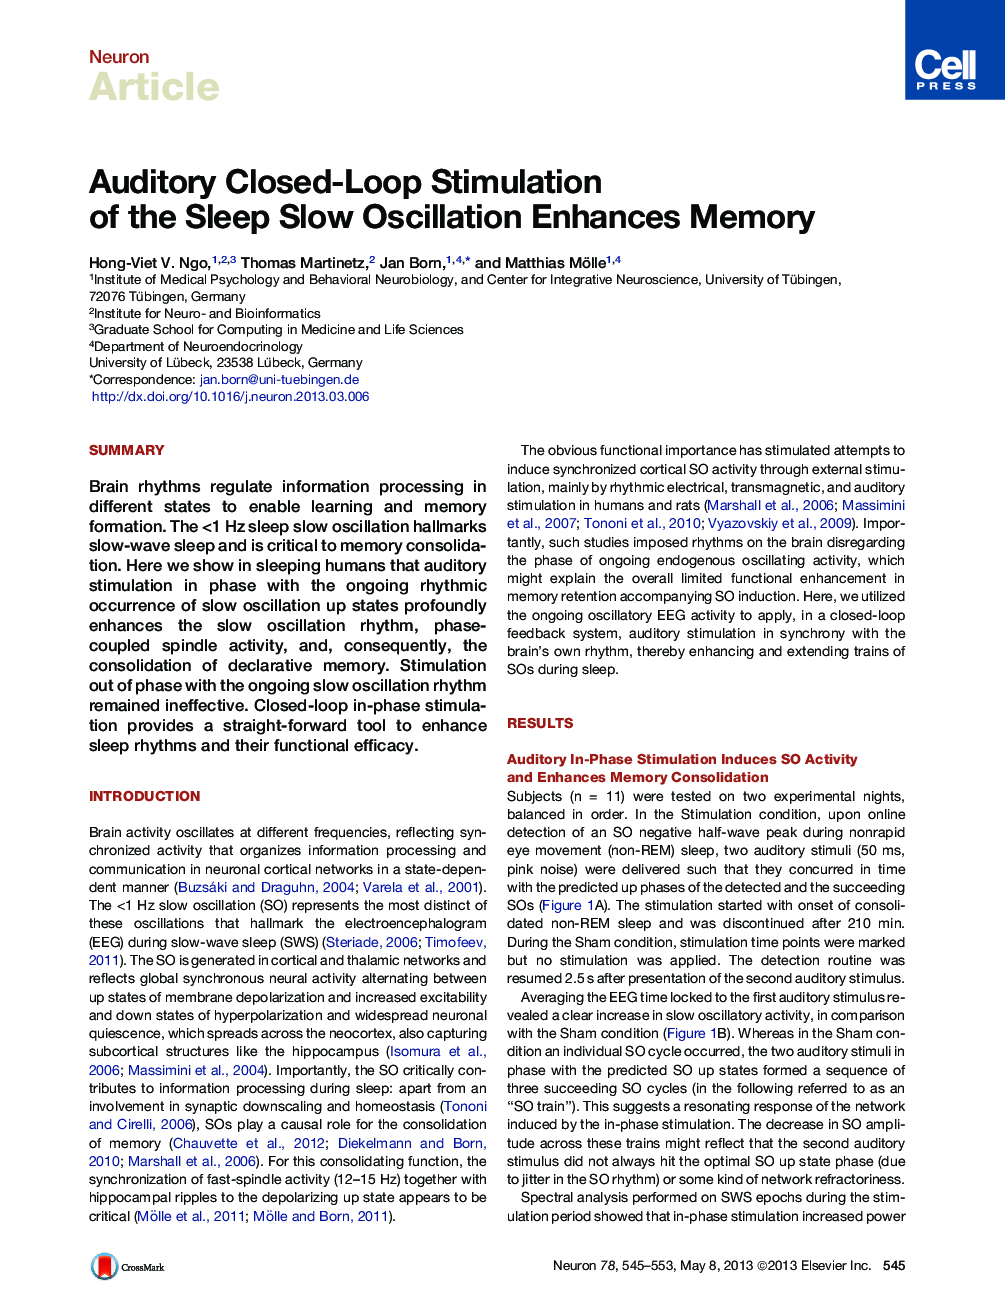 Auditory Closed-Loop Stimulation of the Sleep Slow Oscillation Enhances Memory